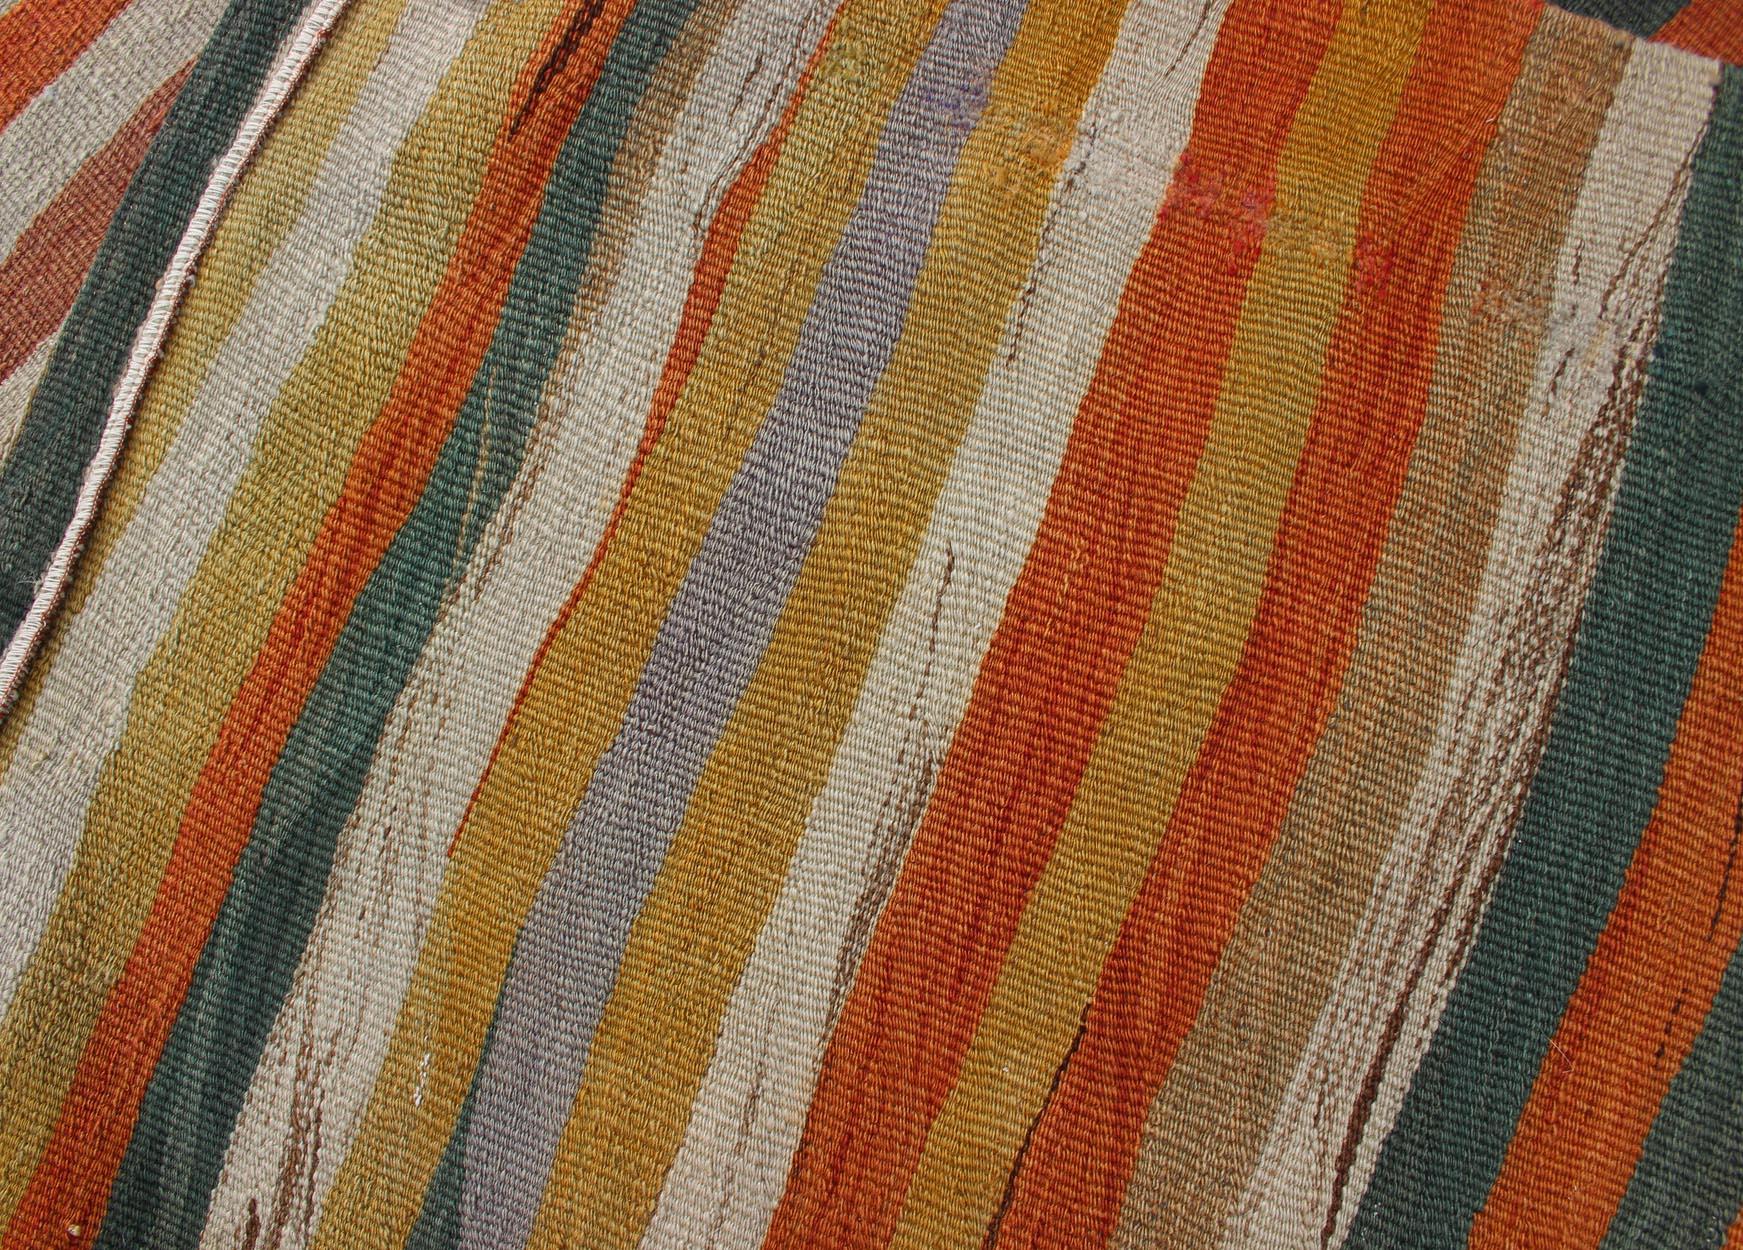 Hand-Woven Multicolored Vintage Kilim Runner Turkish in Multi Color Striped Design